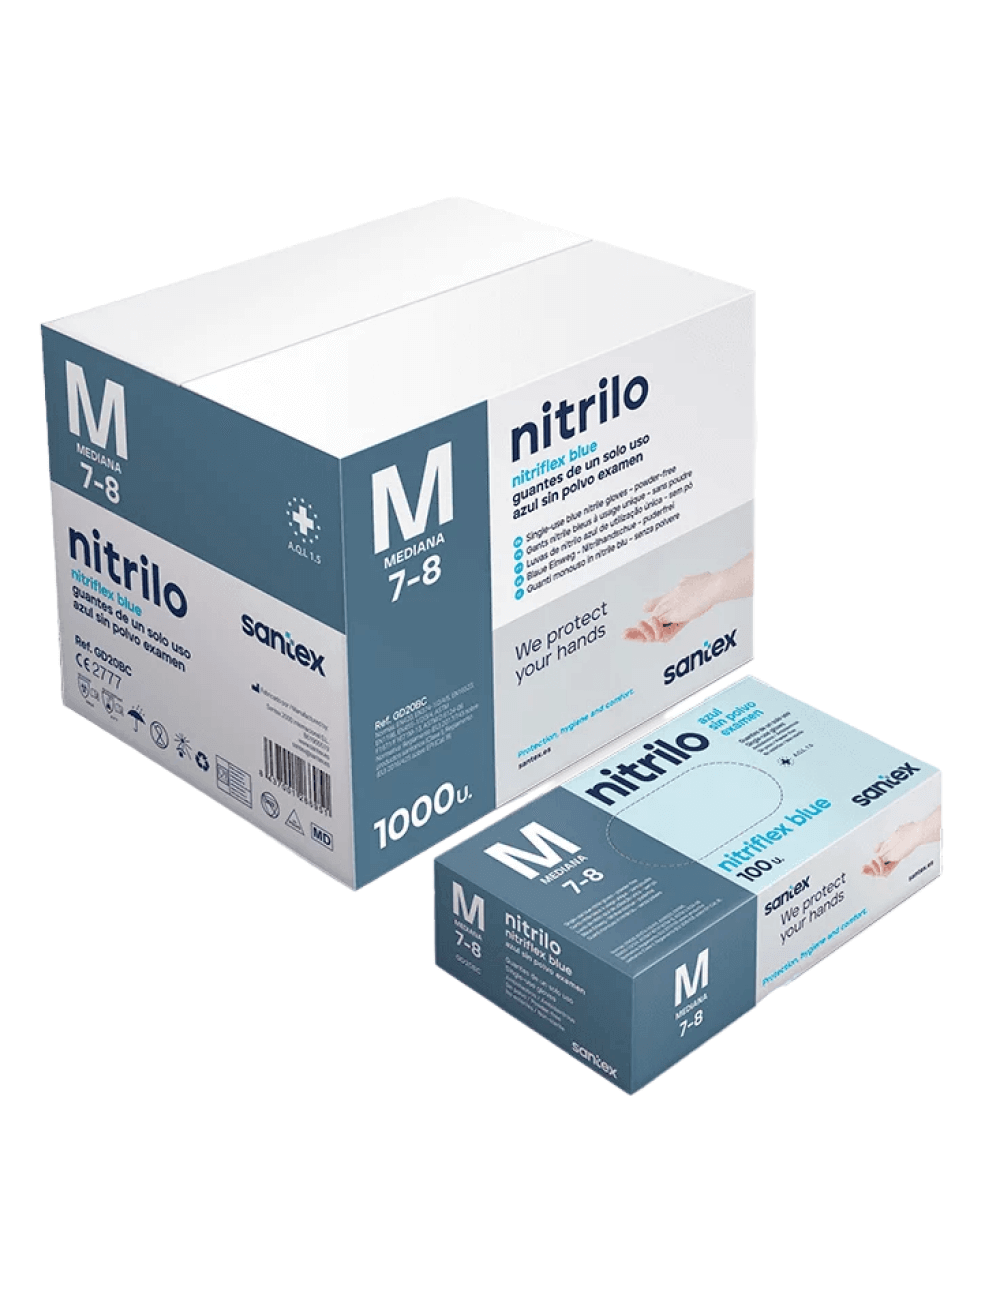 Guantes de nitrilo talla M - 100 unidades